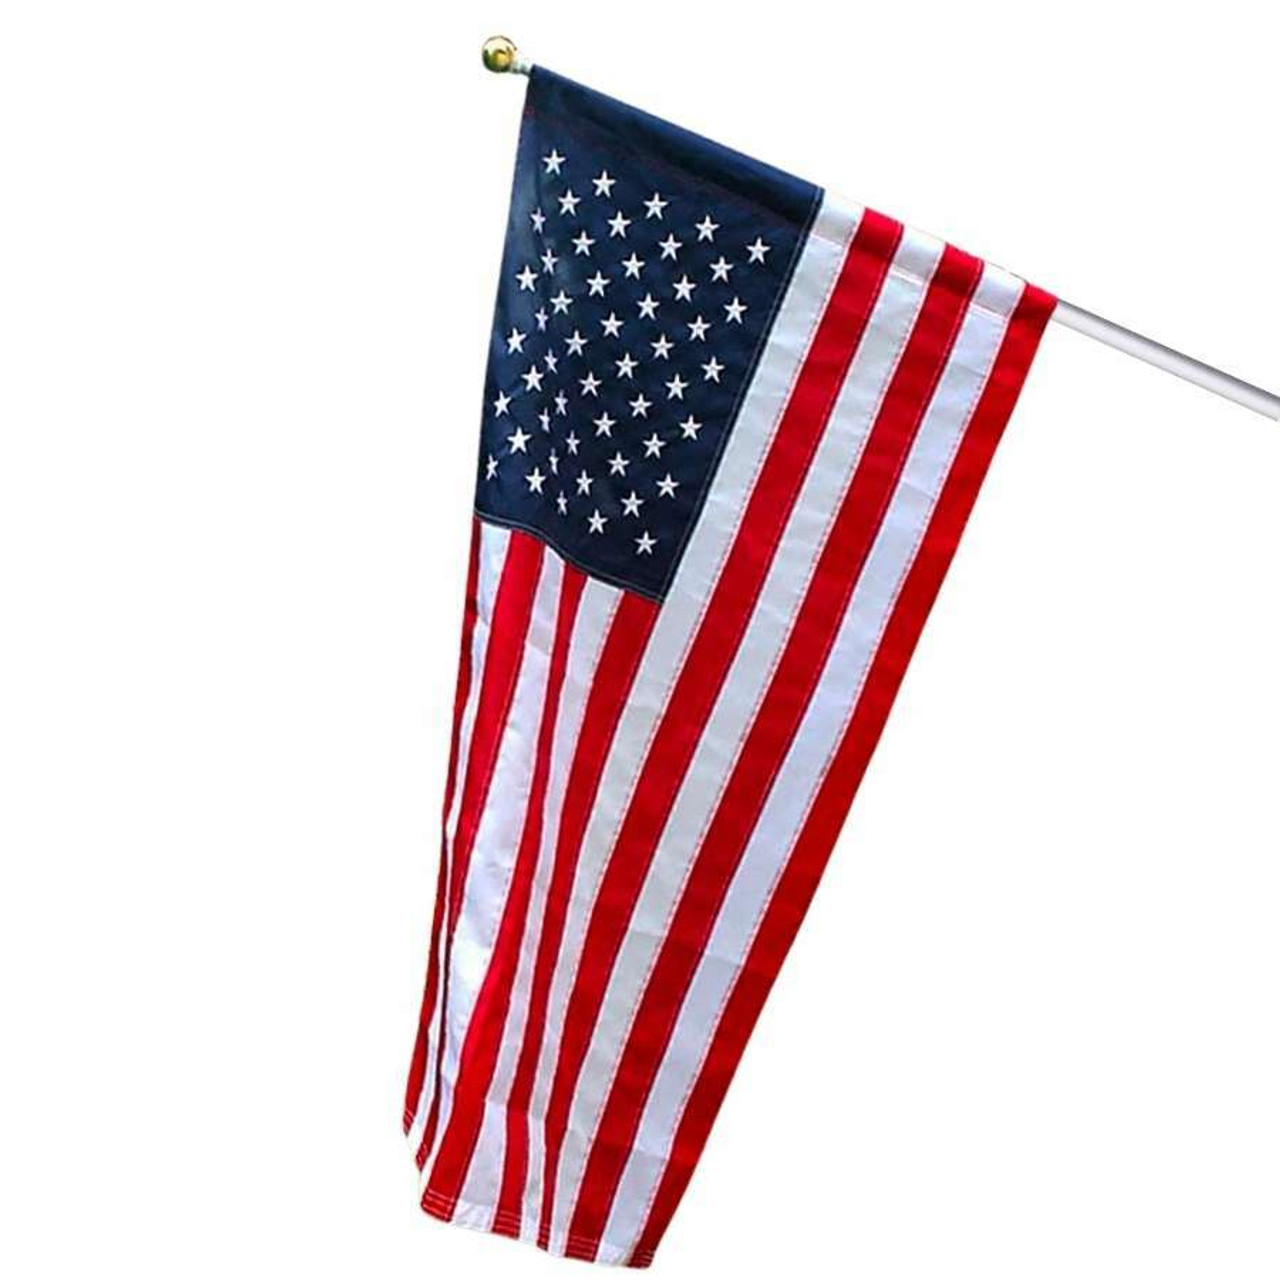 A nylon American flag with a pole sleeve on a tangle-free flagpole. 